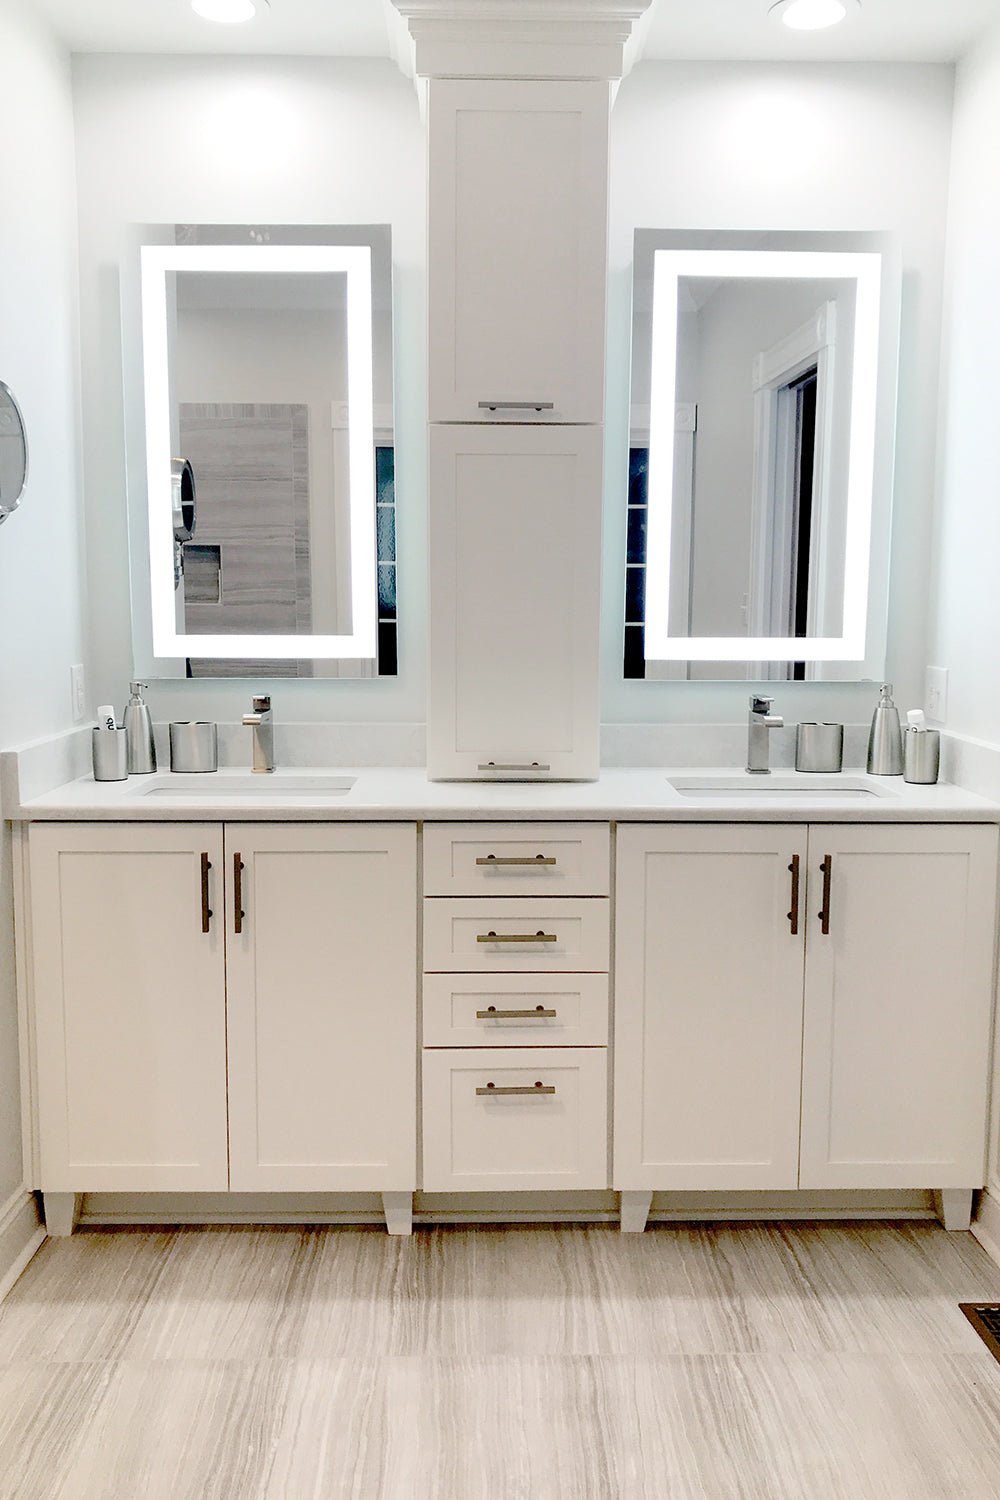 LED Illuminated Bathroom Mirrors and Bathroom Cabinets